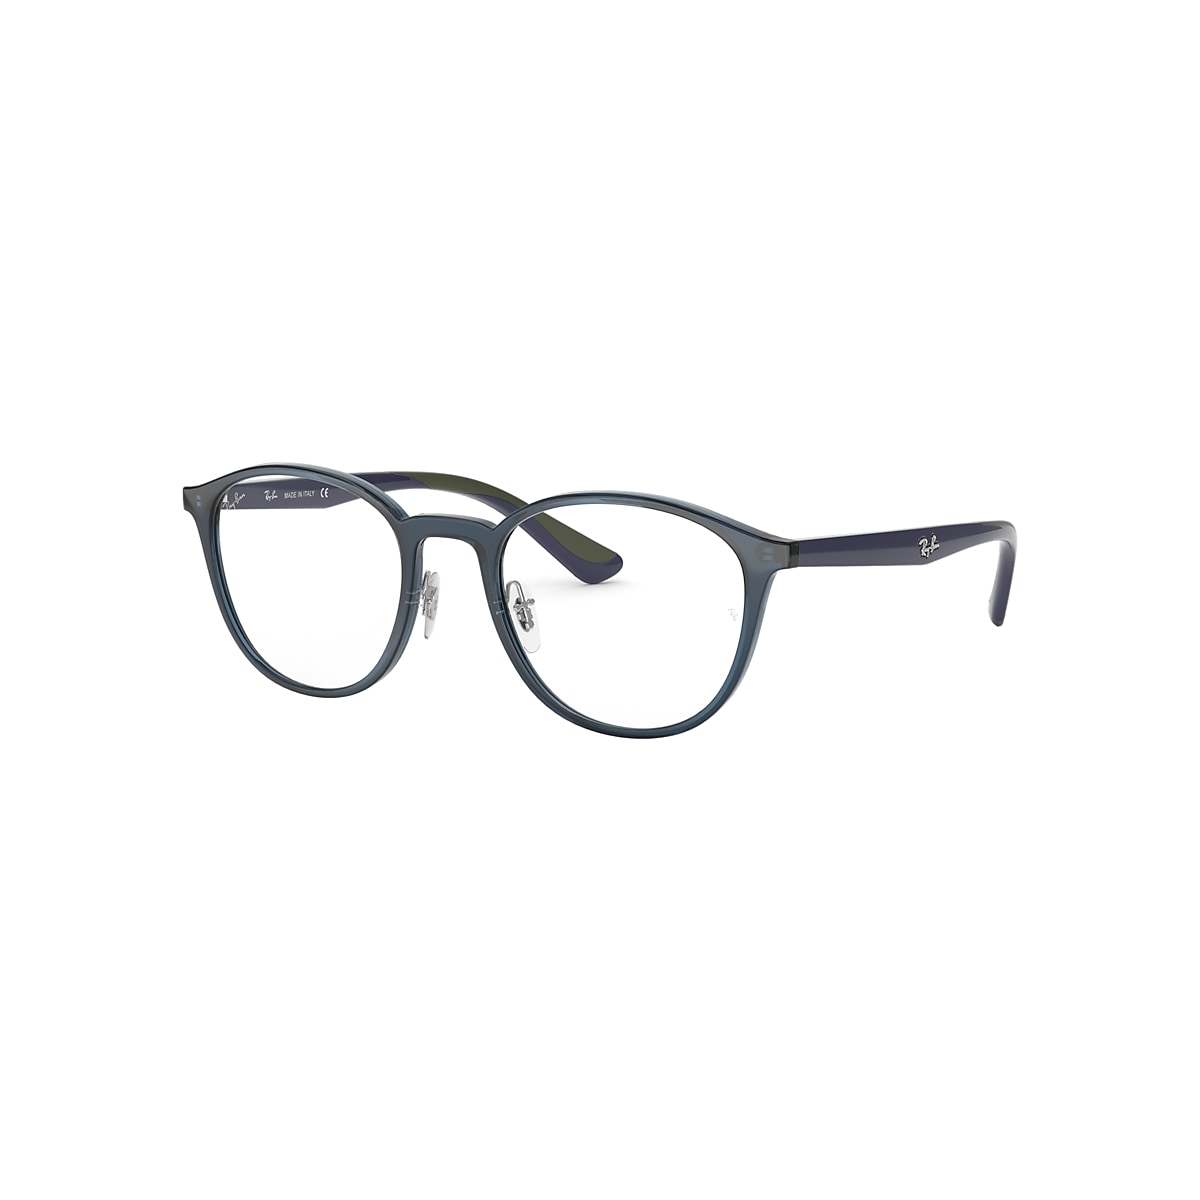 RB7156 OPTICS Eyeglasses with Transparent Dark Blue Frame 